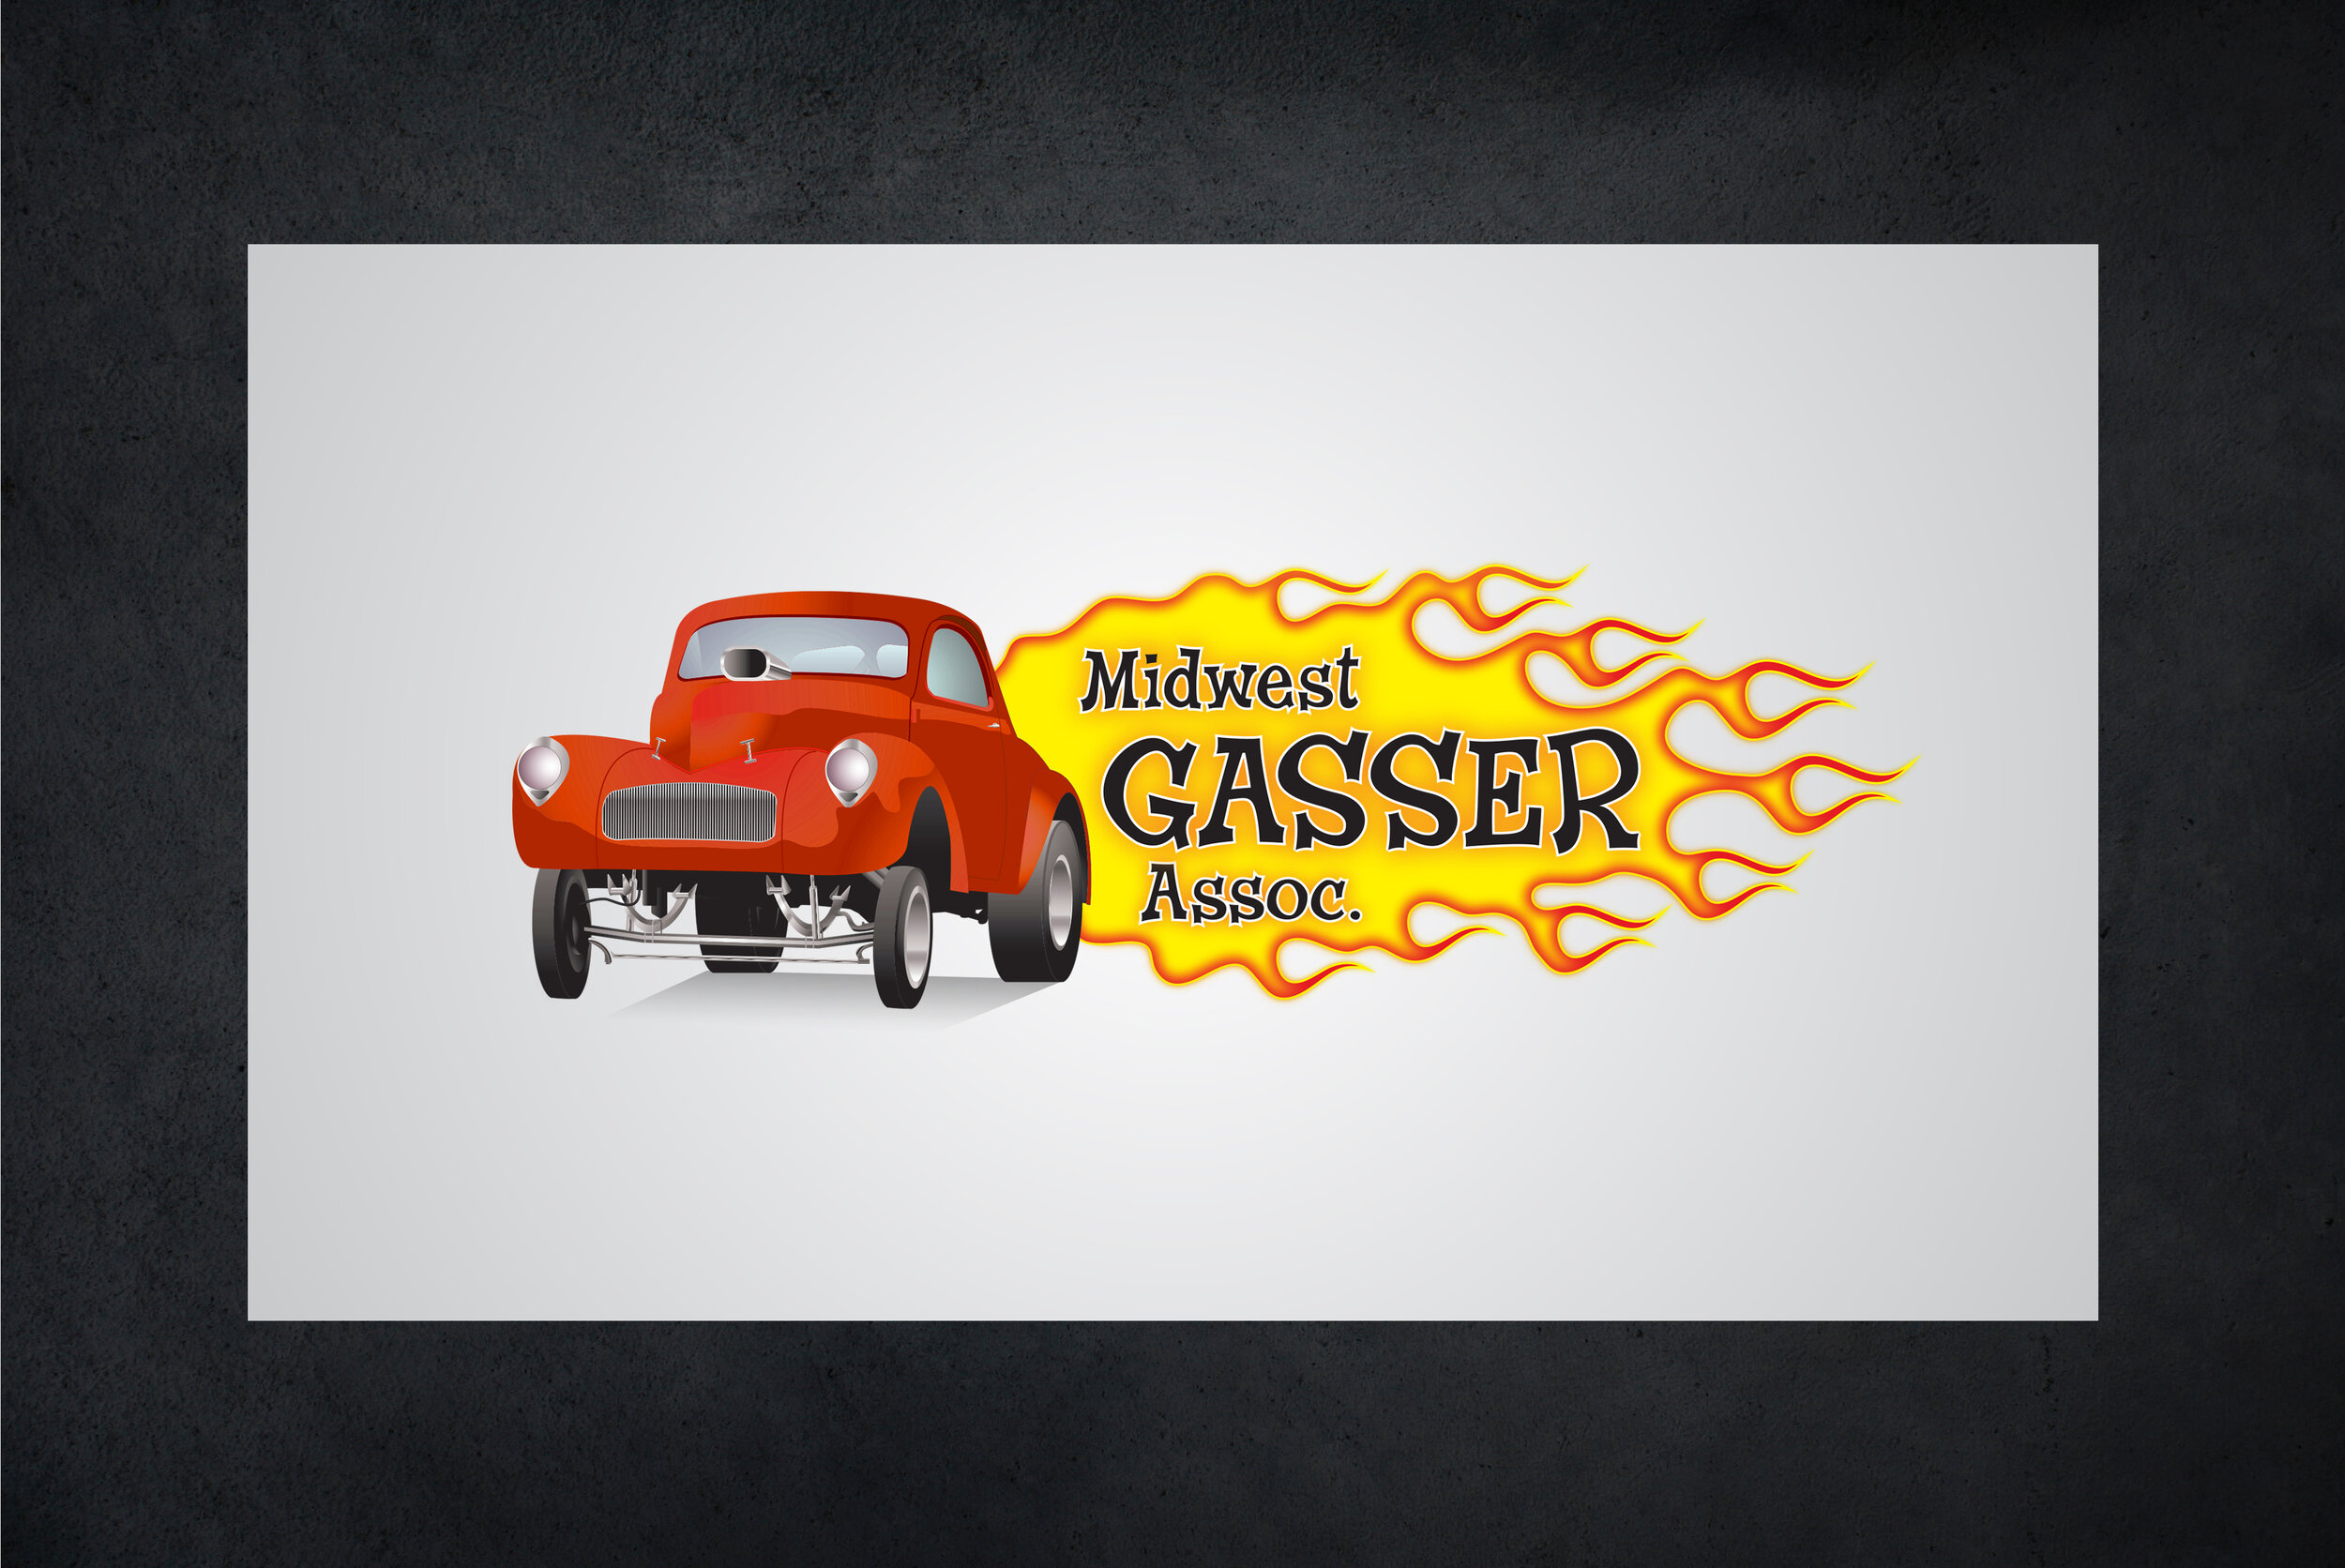 Midwest Gasser Assoc. logo